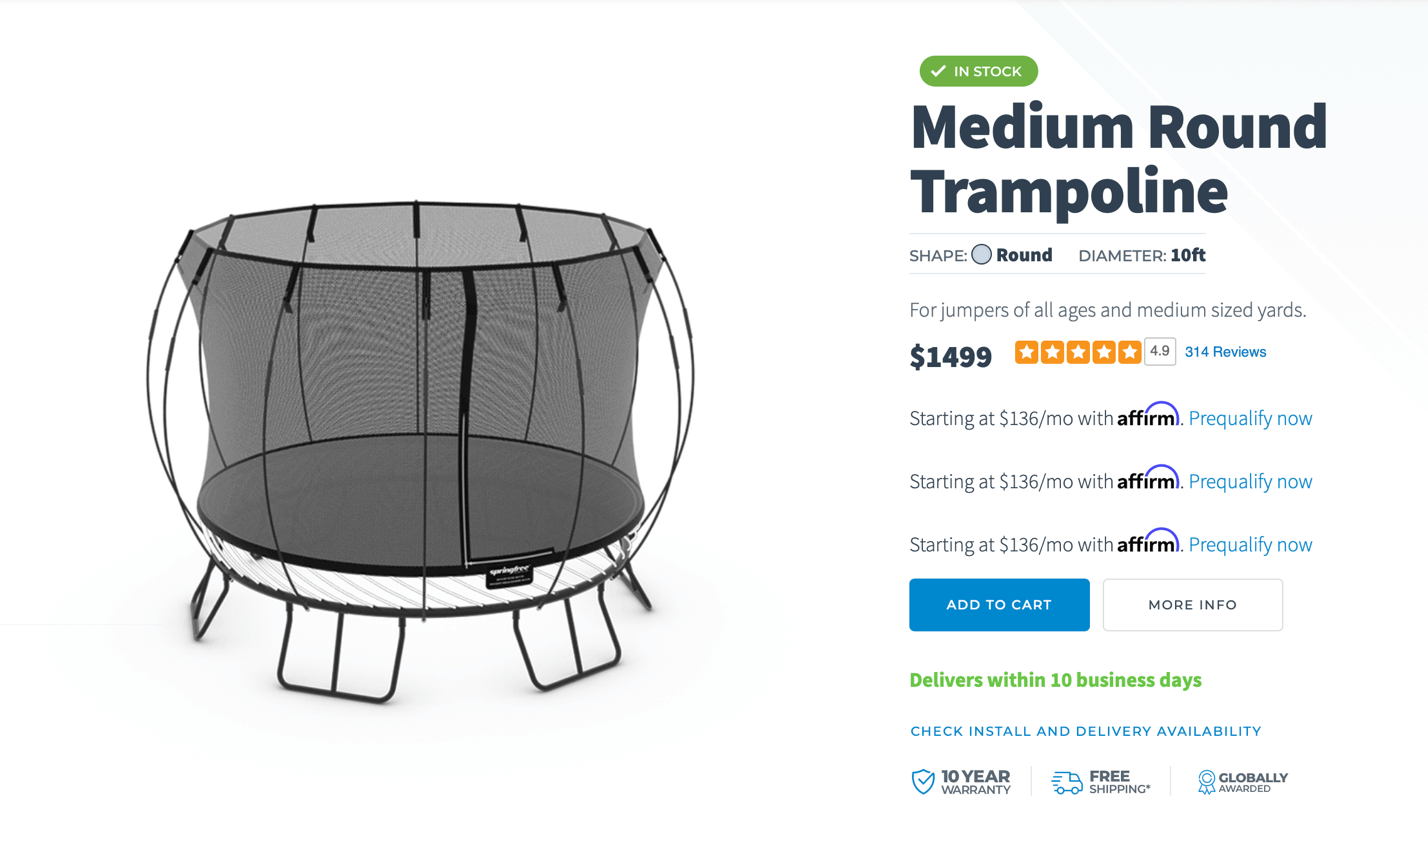 Springfree Medium Round Trampoline product page